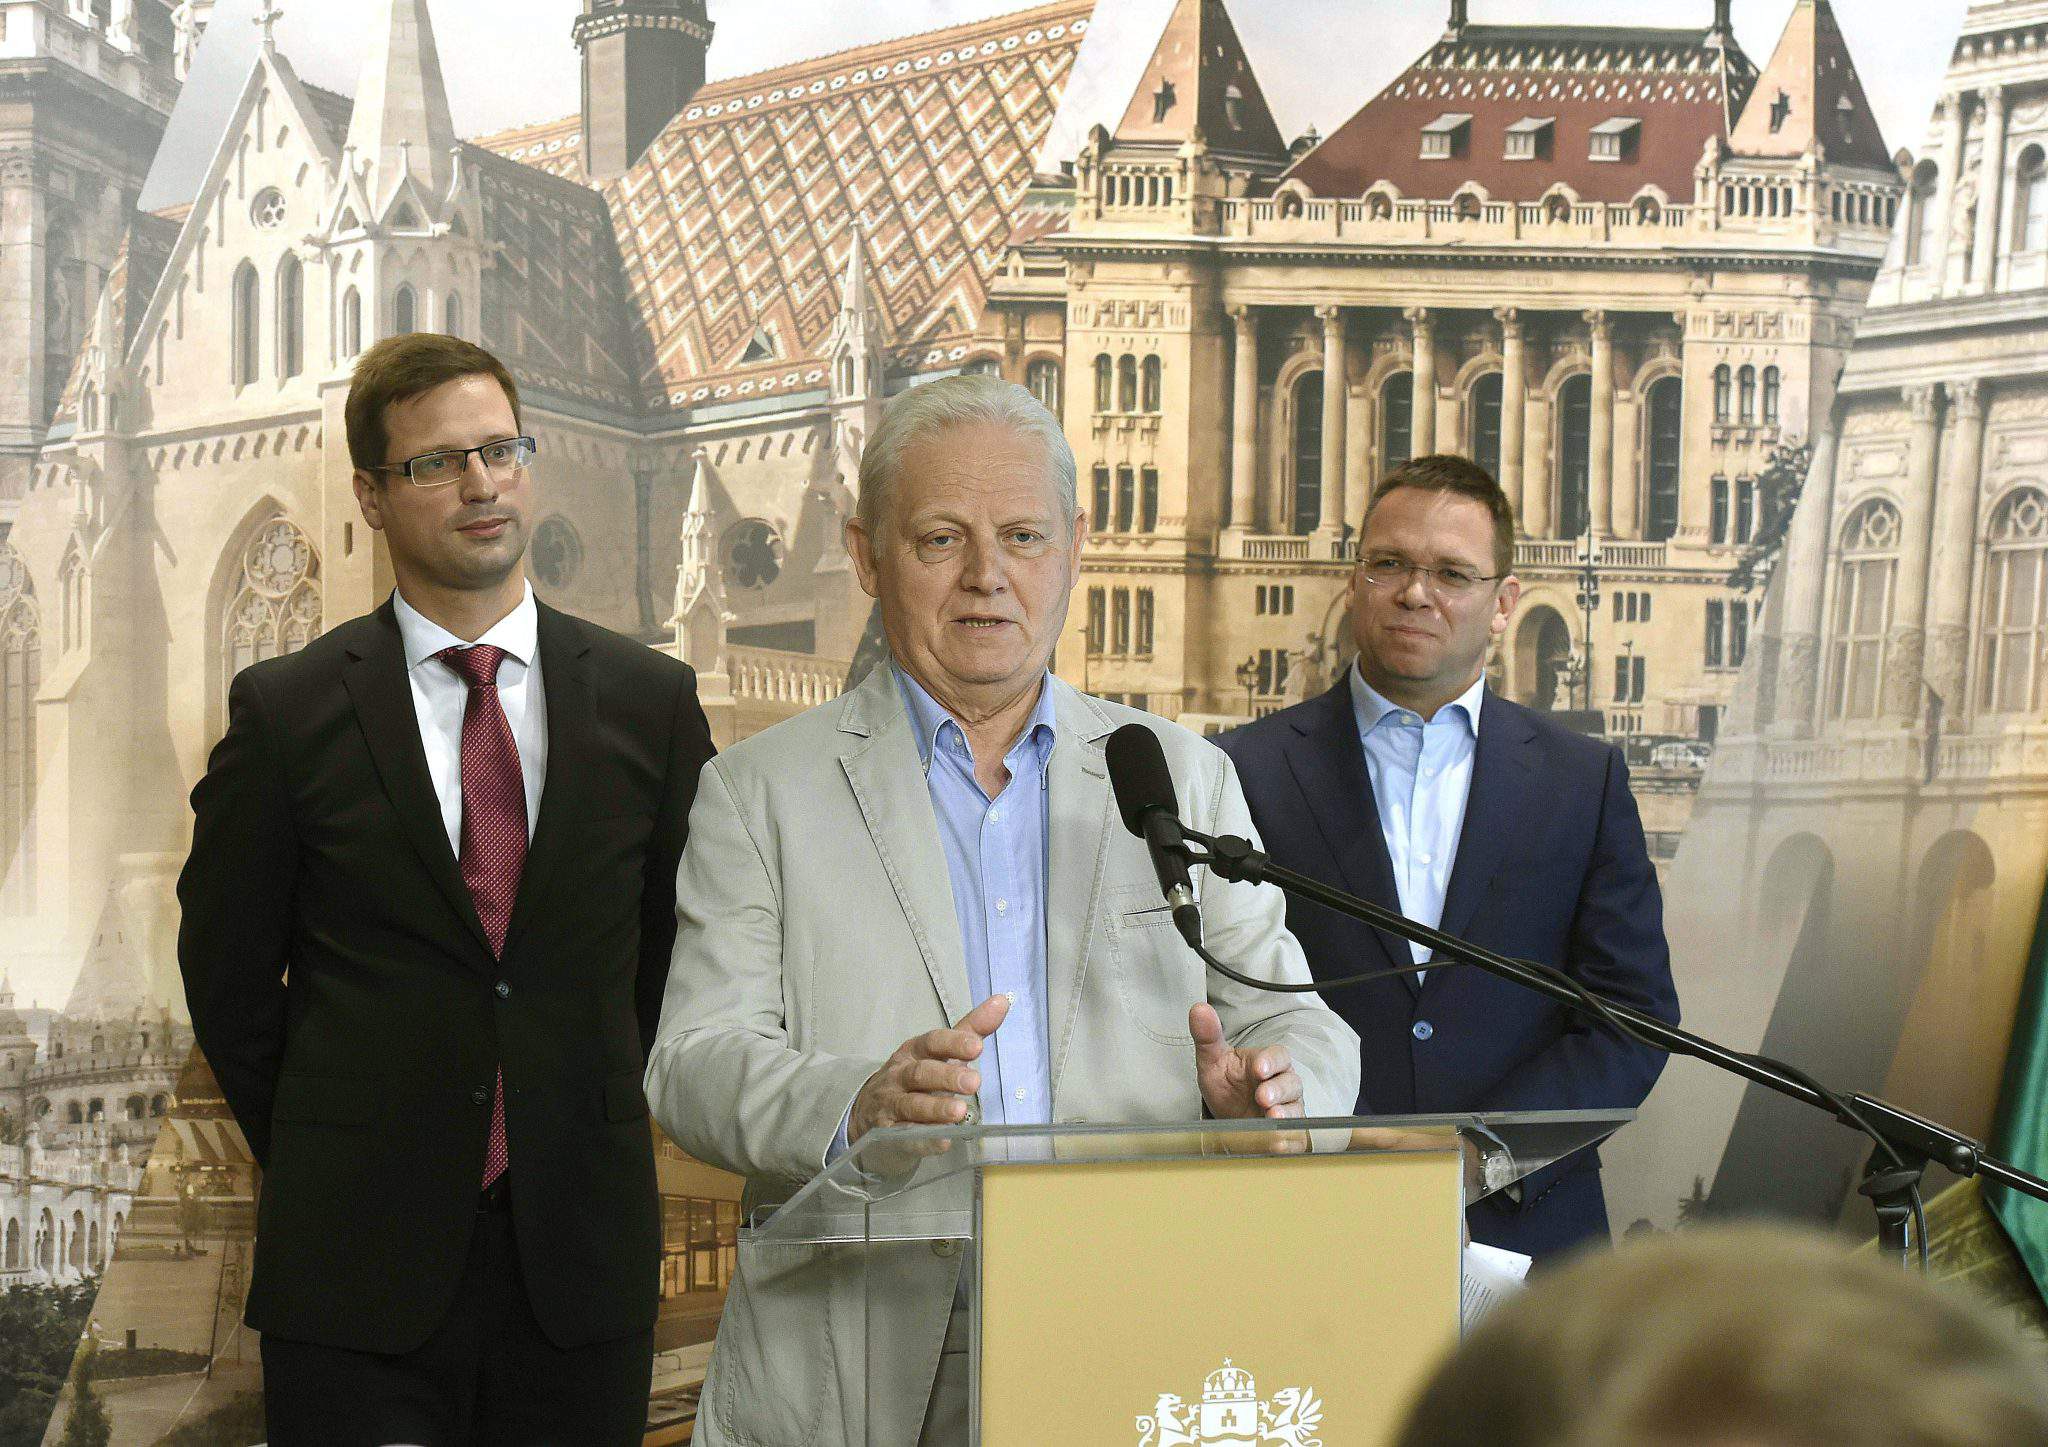 Budapest mayor Tarlós